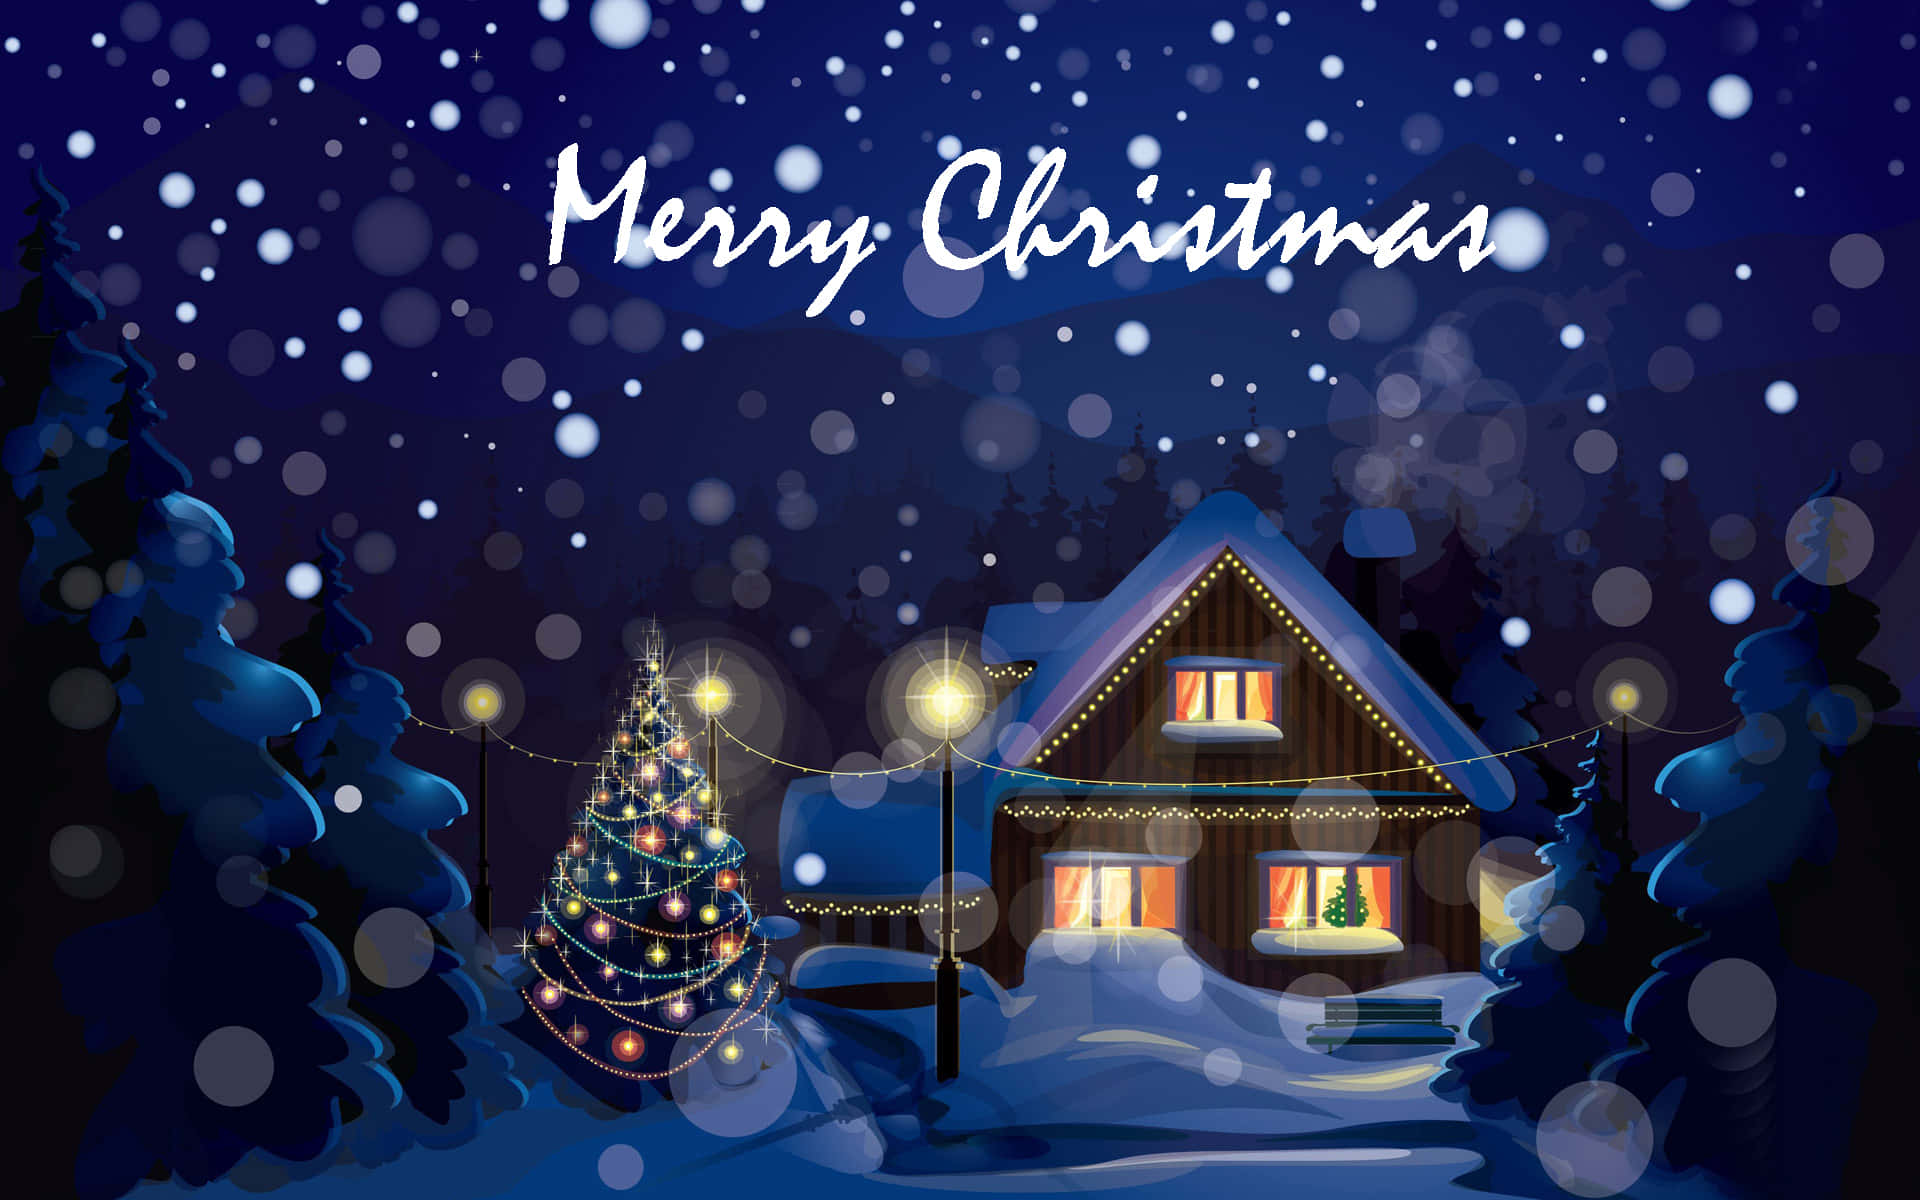 Wishing You a Very Merry Christmas